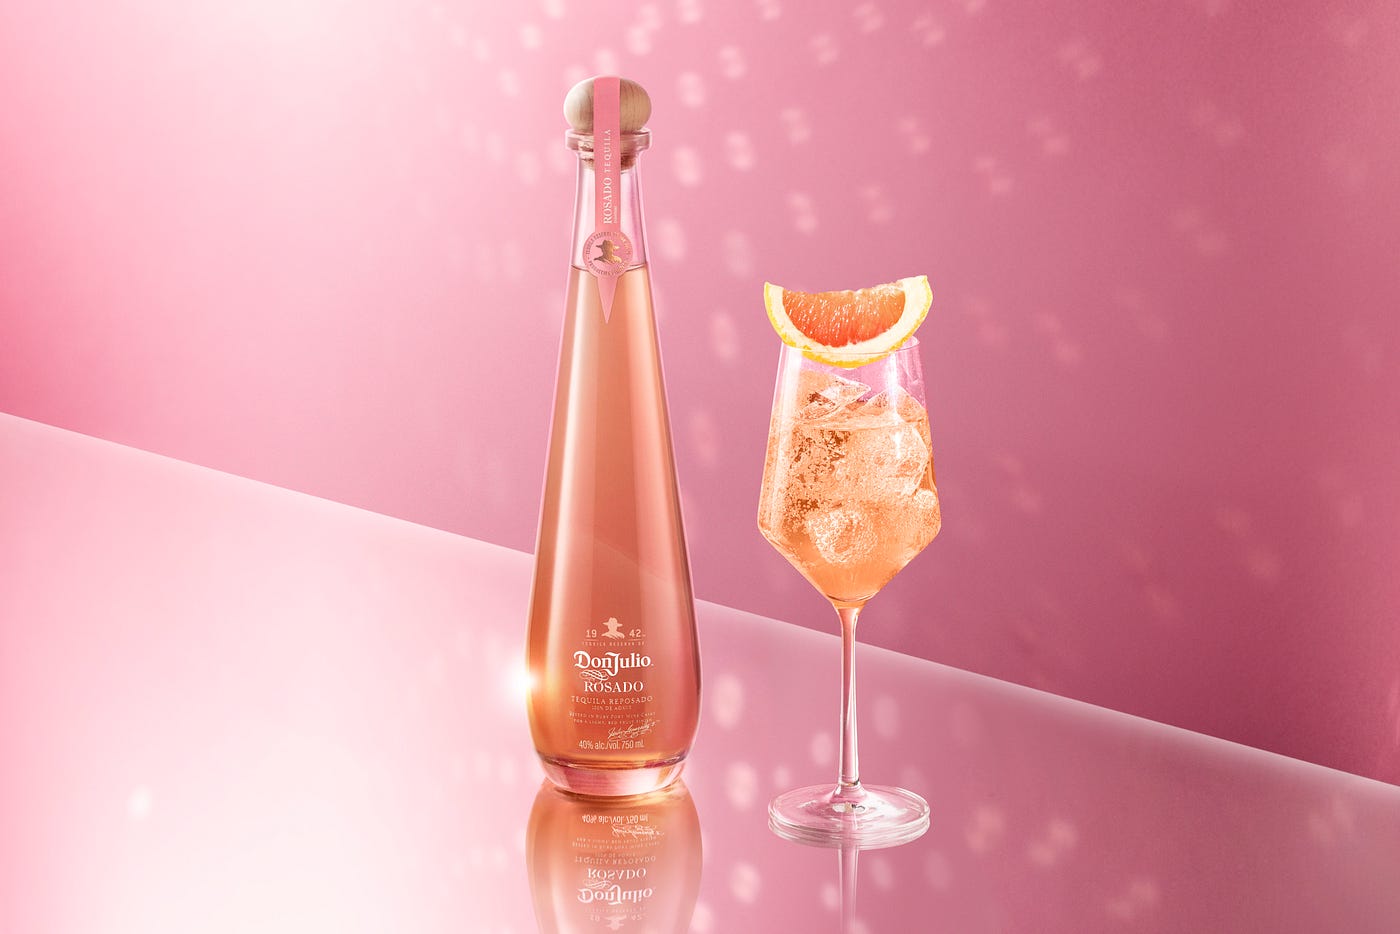 G.H. Mumm - Brut Rosé “Grand Cordon” Champagne 750ml - Old Town Tequila